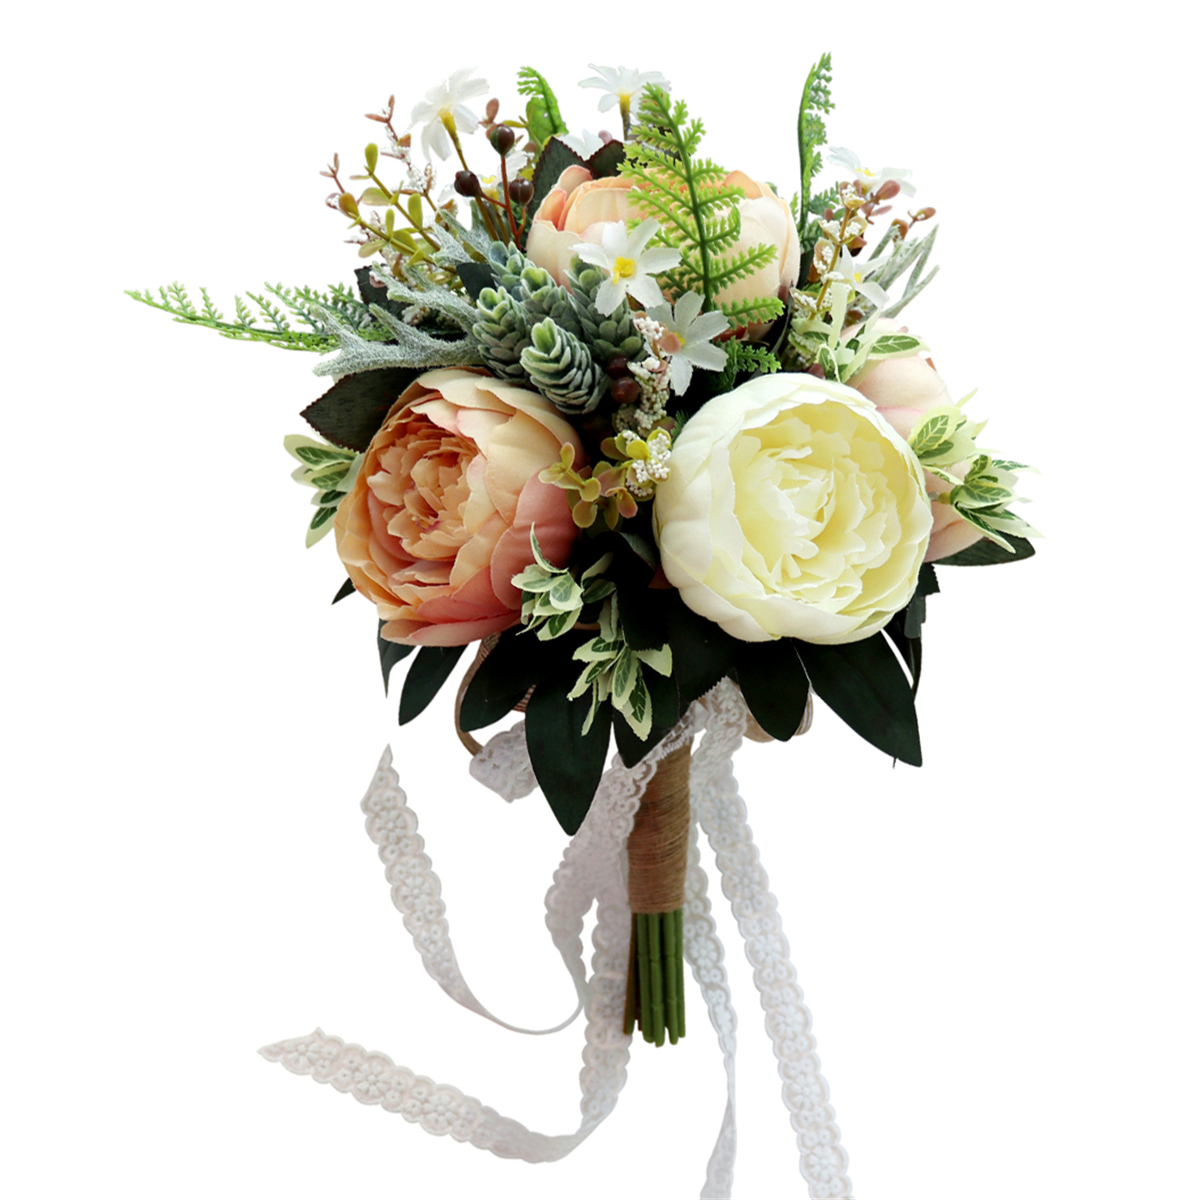 Wedding-Bridal-Bouquets-Handmade-Artificial-Flowers-Decorations-Bride-Accessories-1643090-2